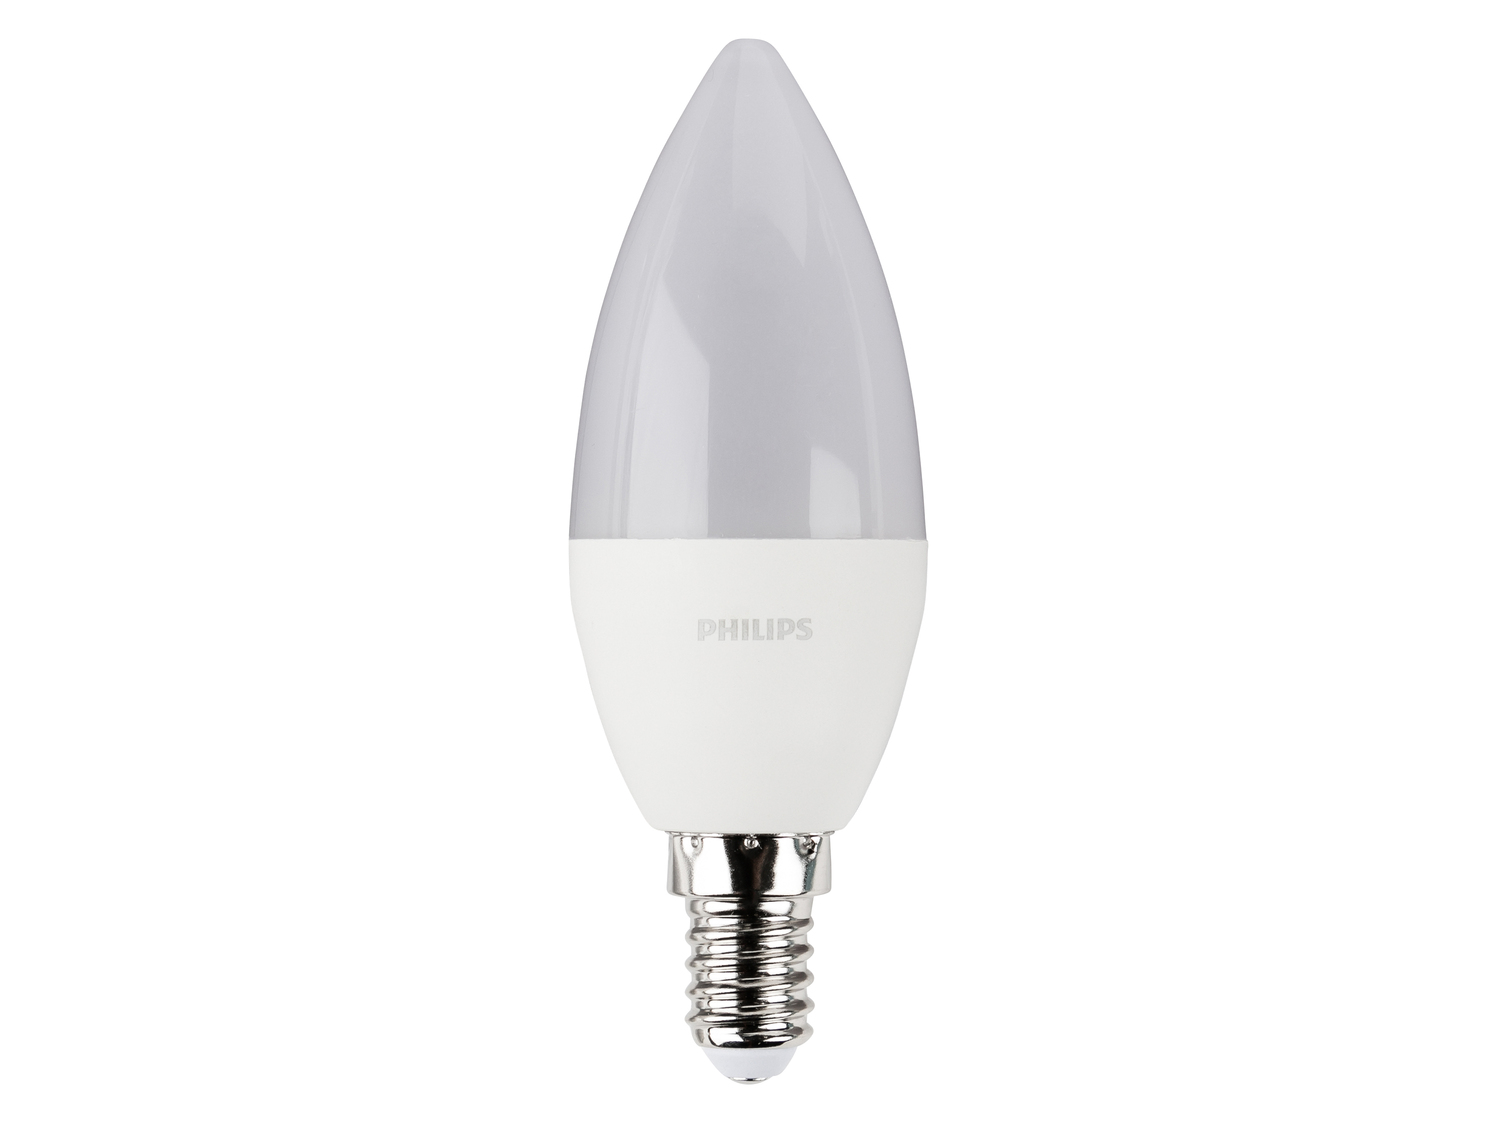 Lampadina LED Philips, prezzo 6.99 &#8364; 
3 pezzi 
E27
- 9W
- bianco caldo
- ...